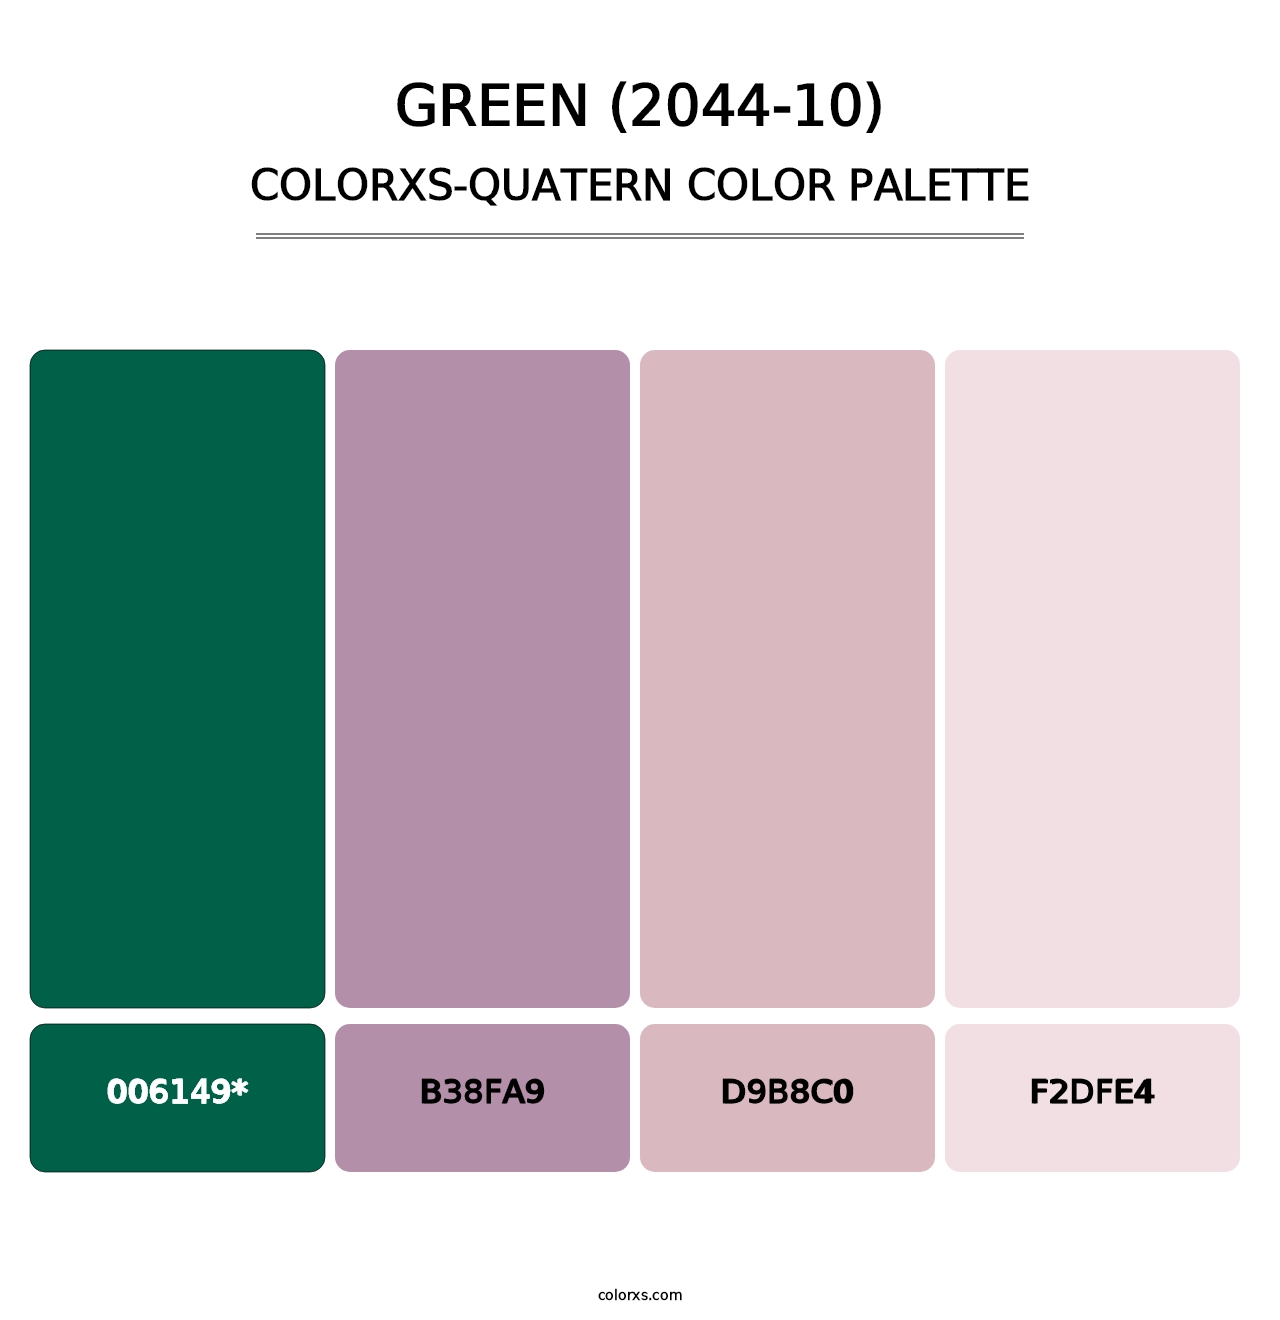 Green (2044-10) - Colorxs Quatern Palette